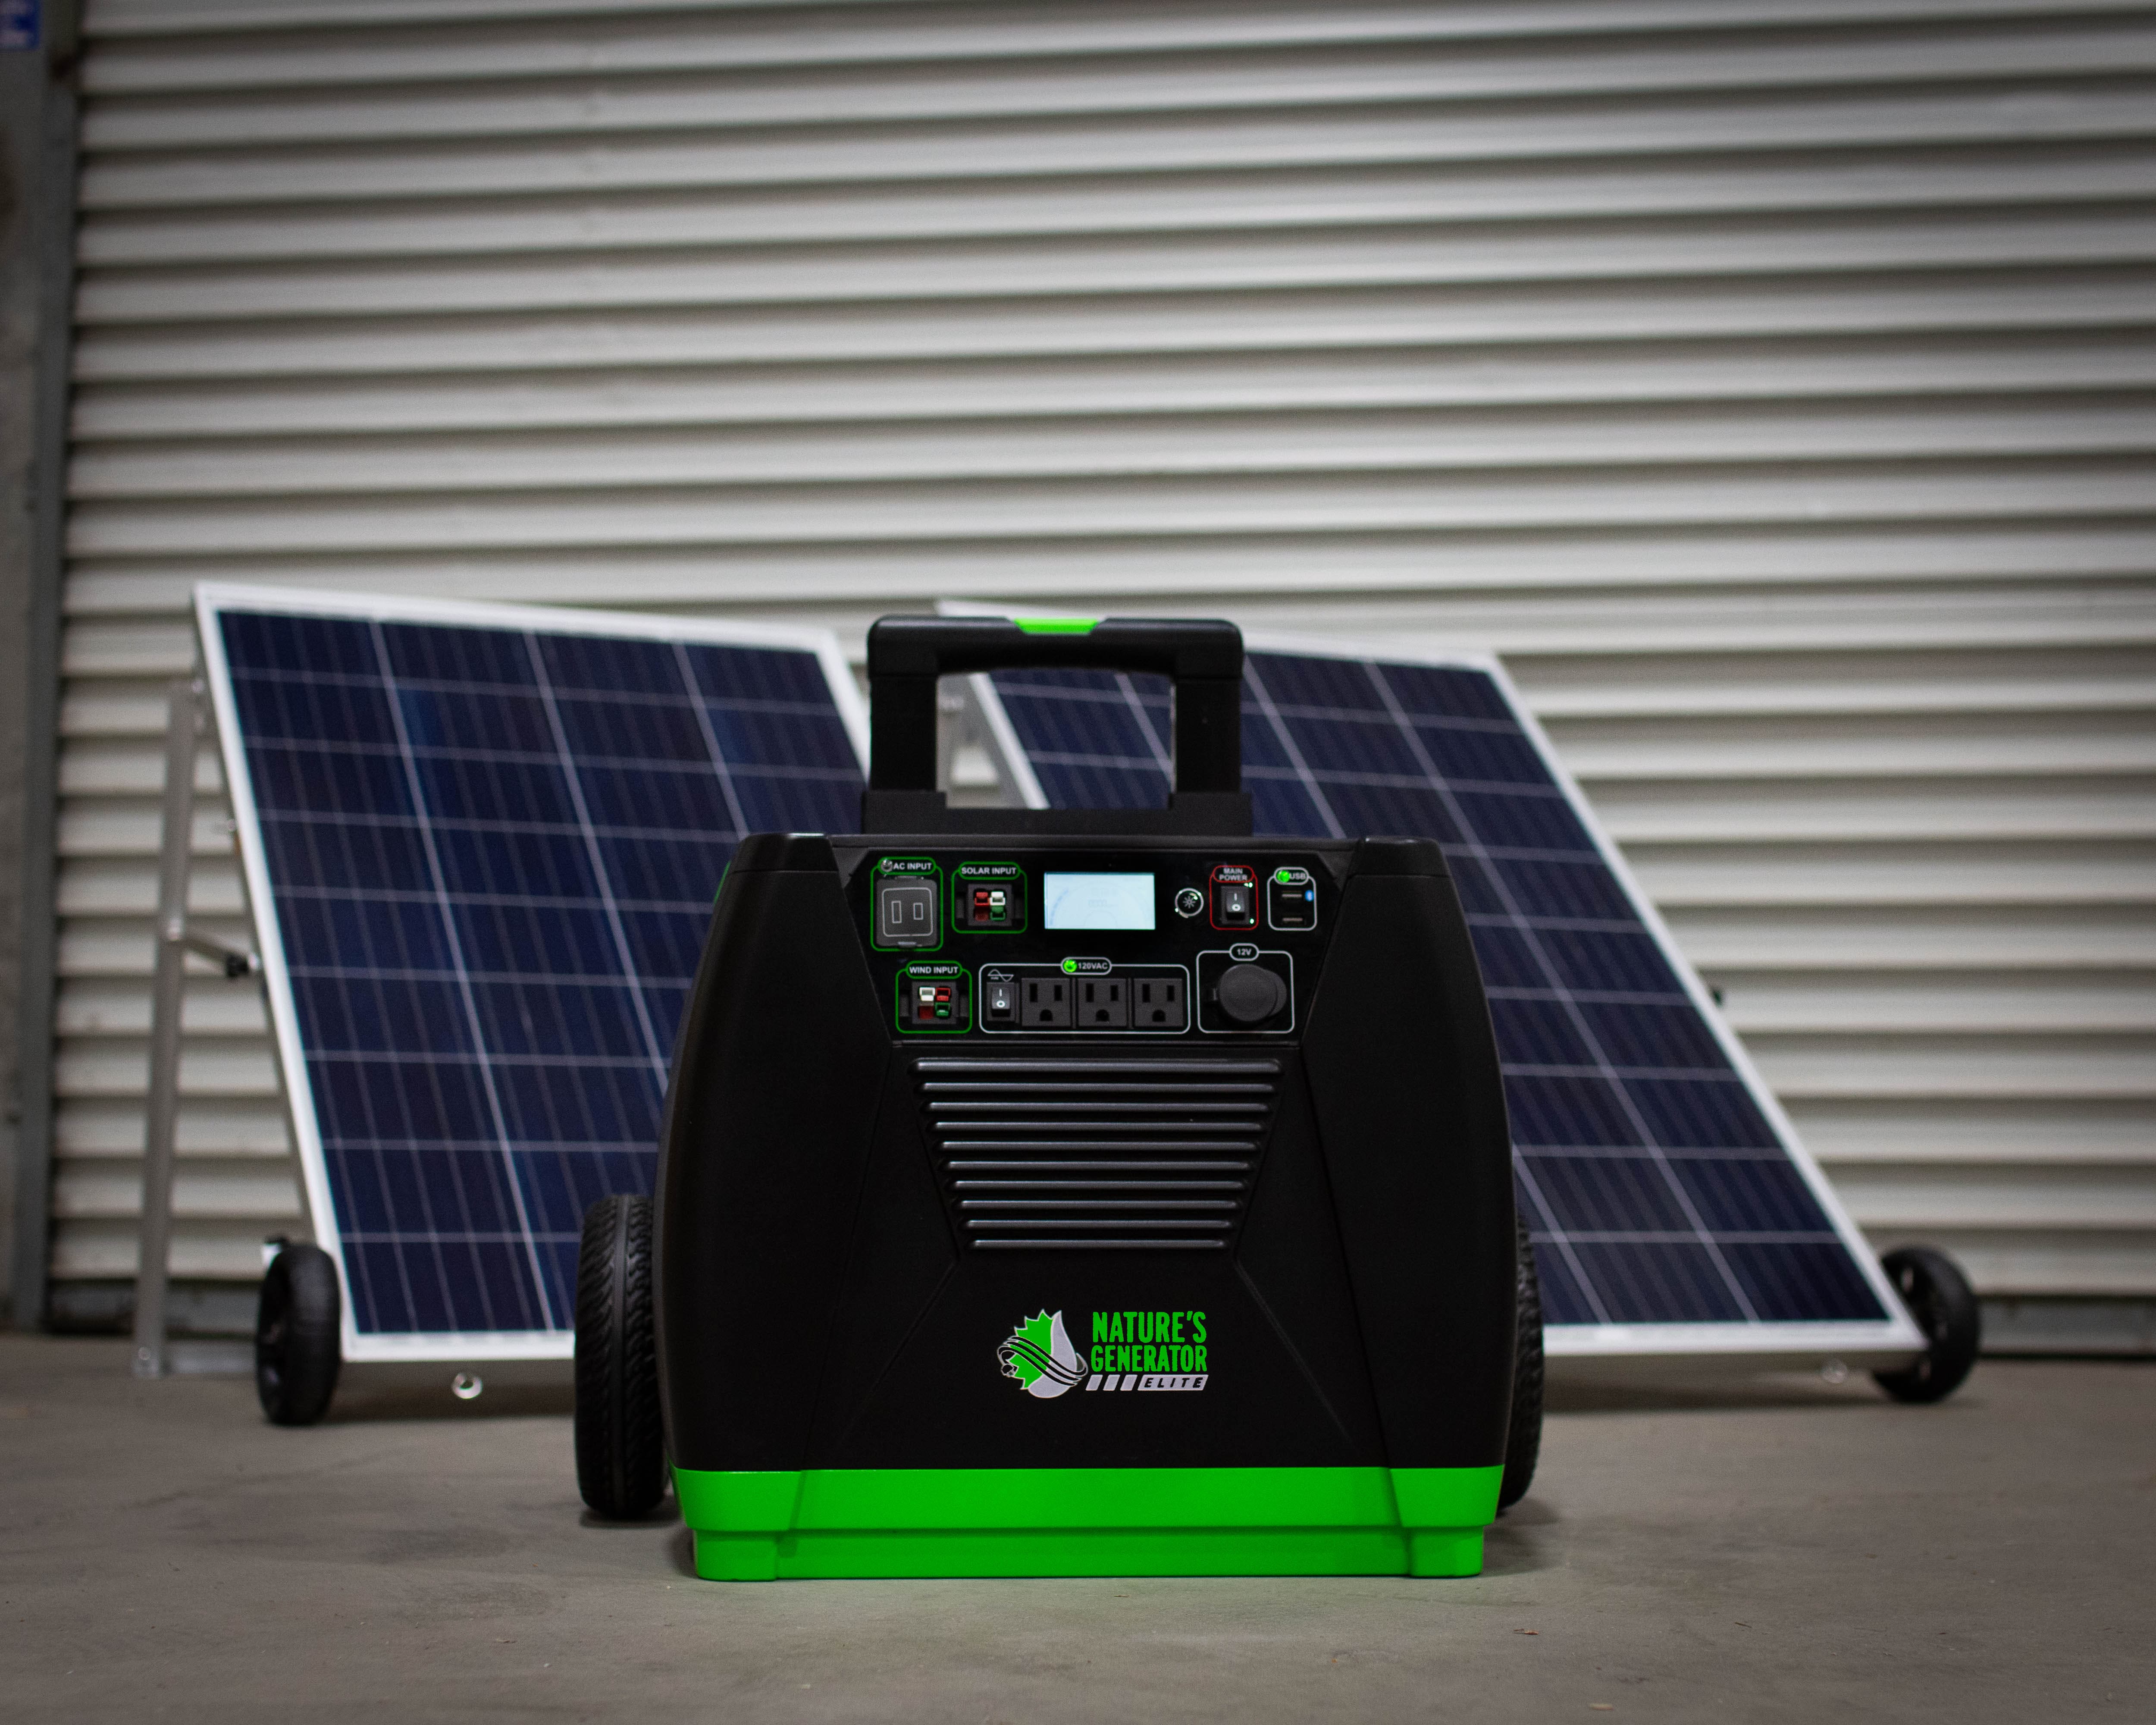 Nature's Generator Elite Gold System 3600W + 2x 100W Solar Panel Solar Generator Kit